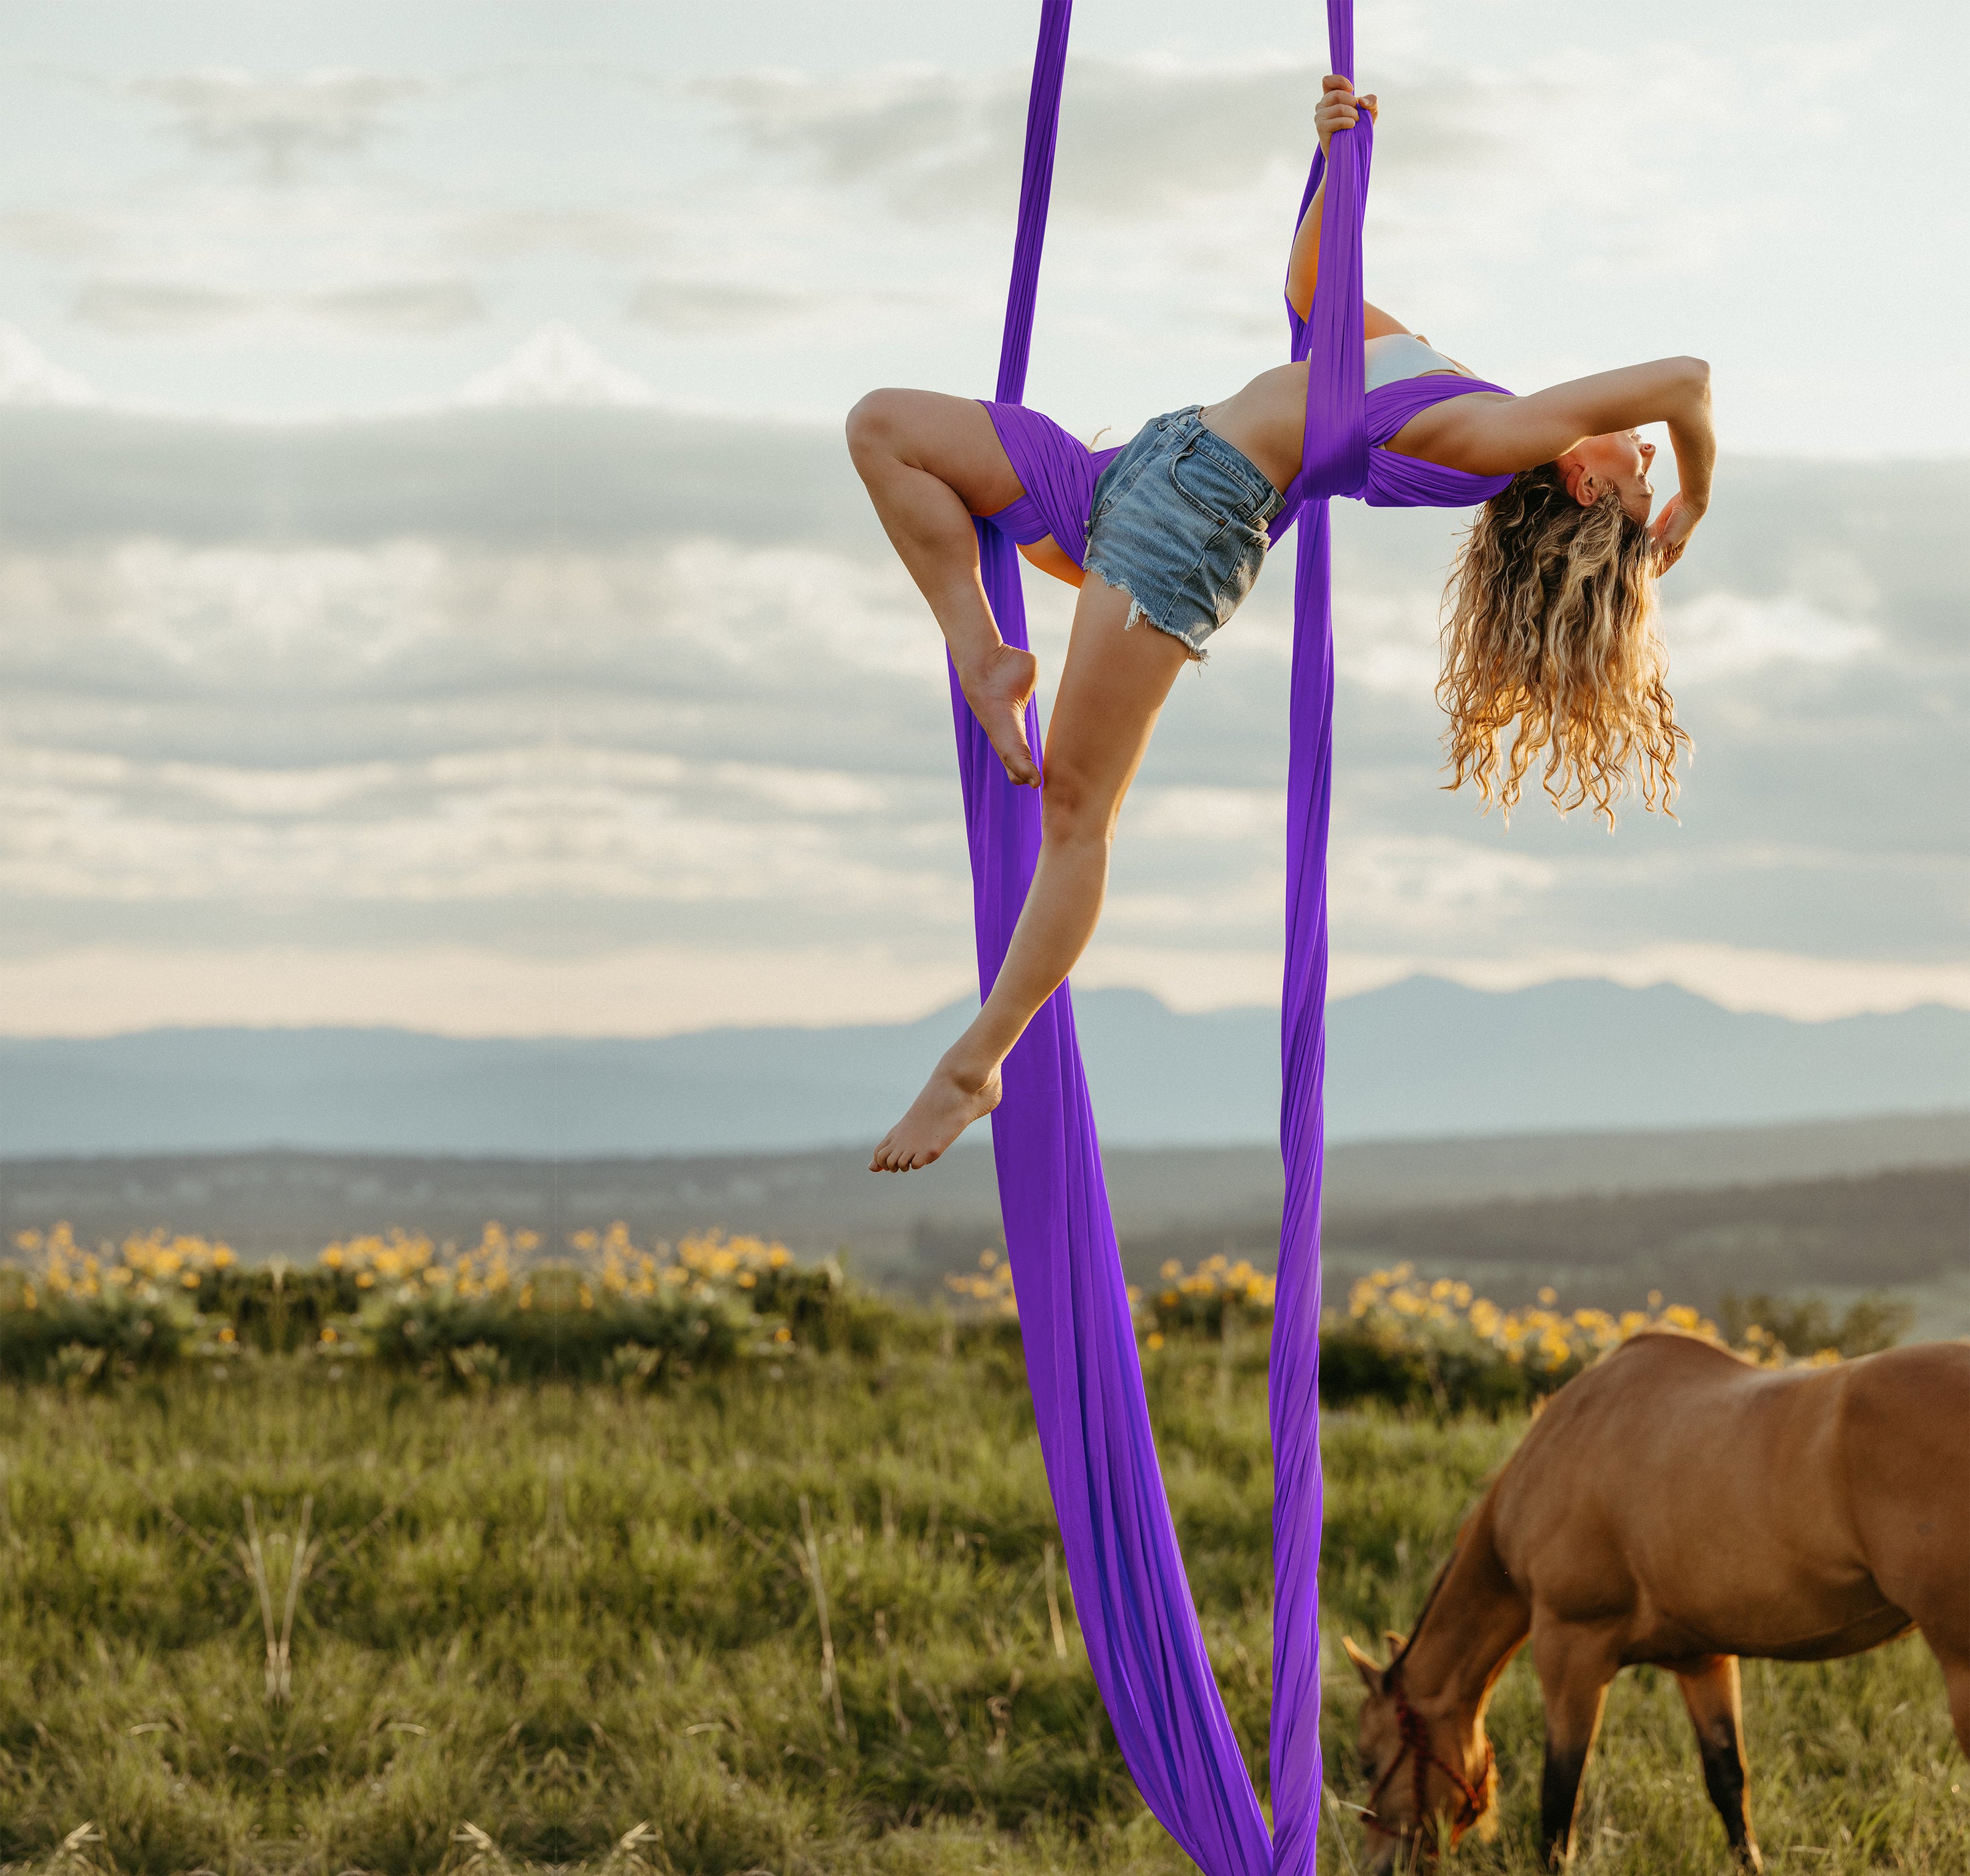 Woman doing aerial silks in farm field with purple aerial silks